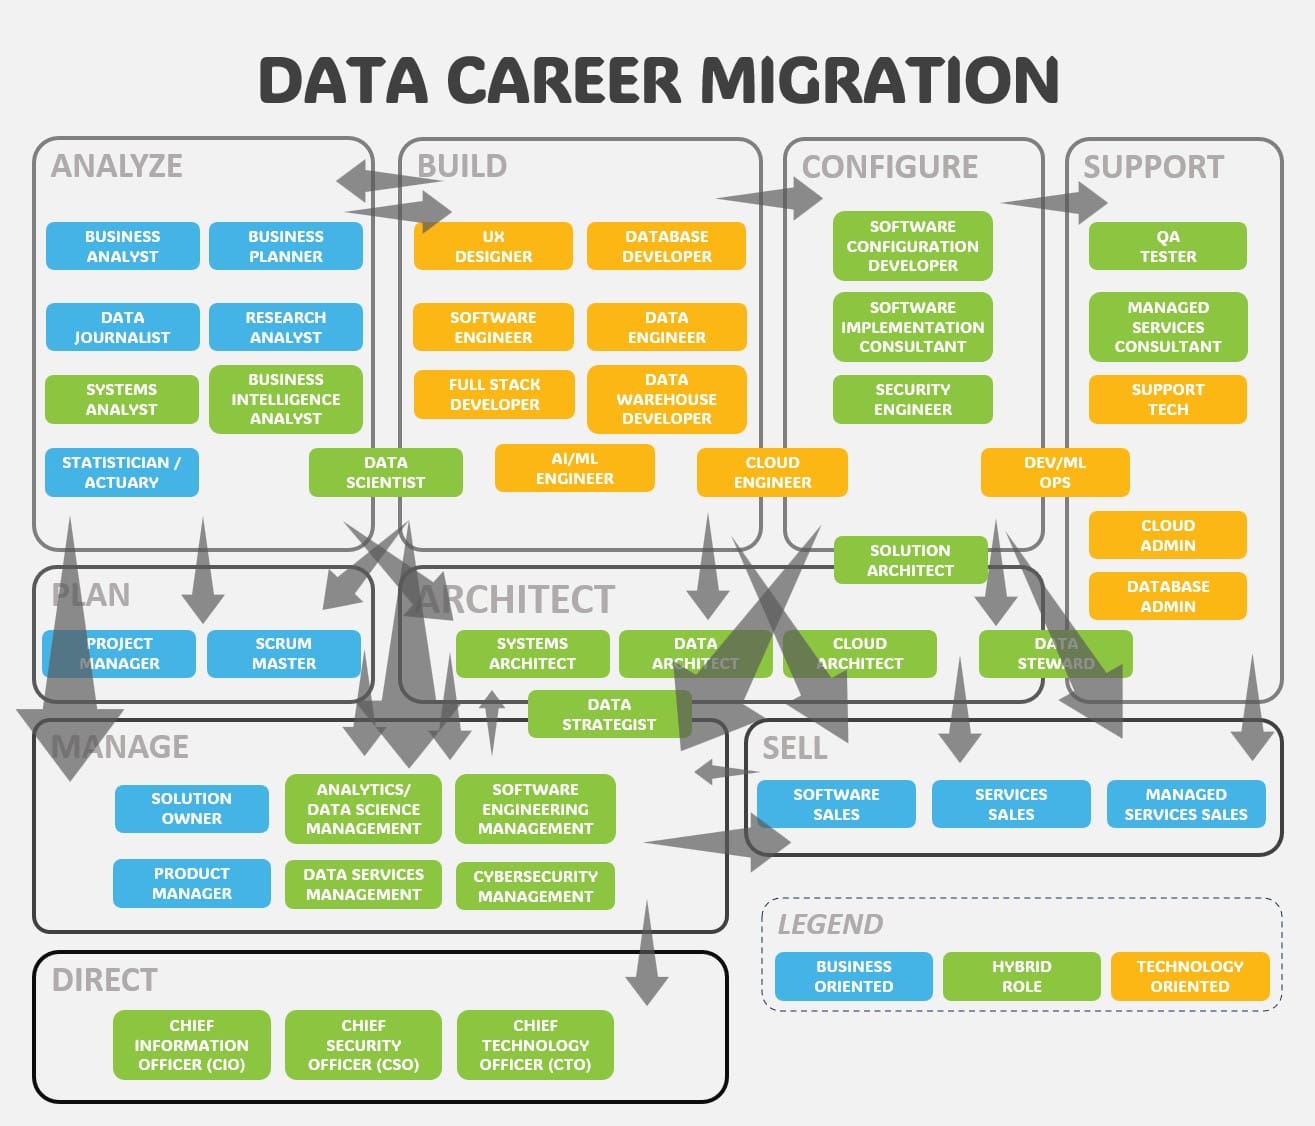 Data Career Migration